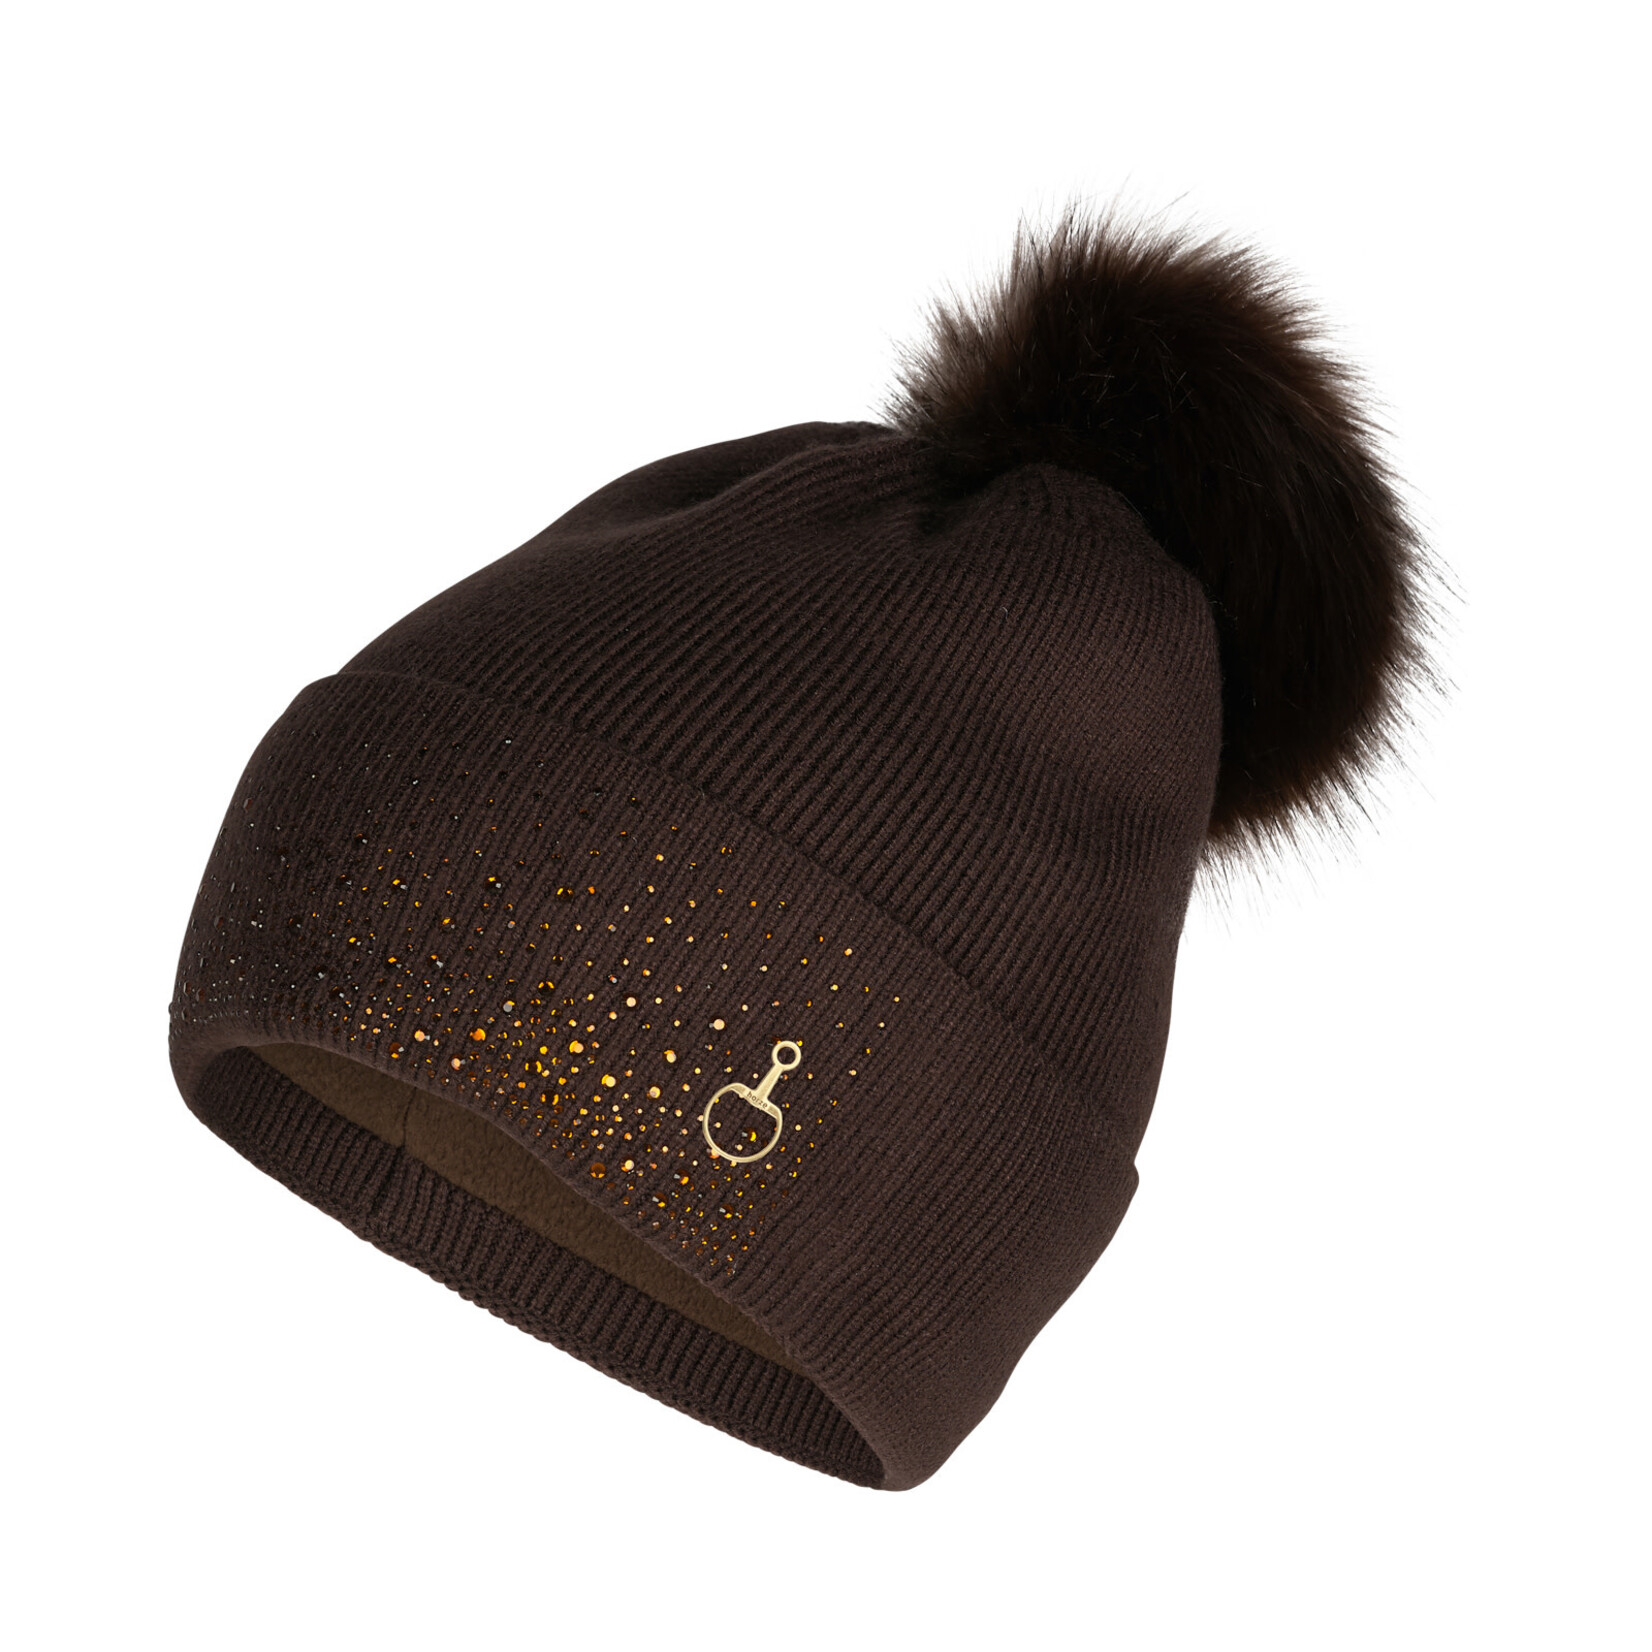 Horze Leona Women's Knitted Hat w/ Crystals